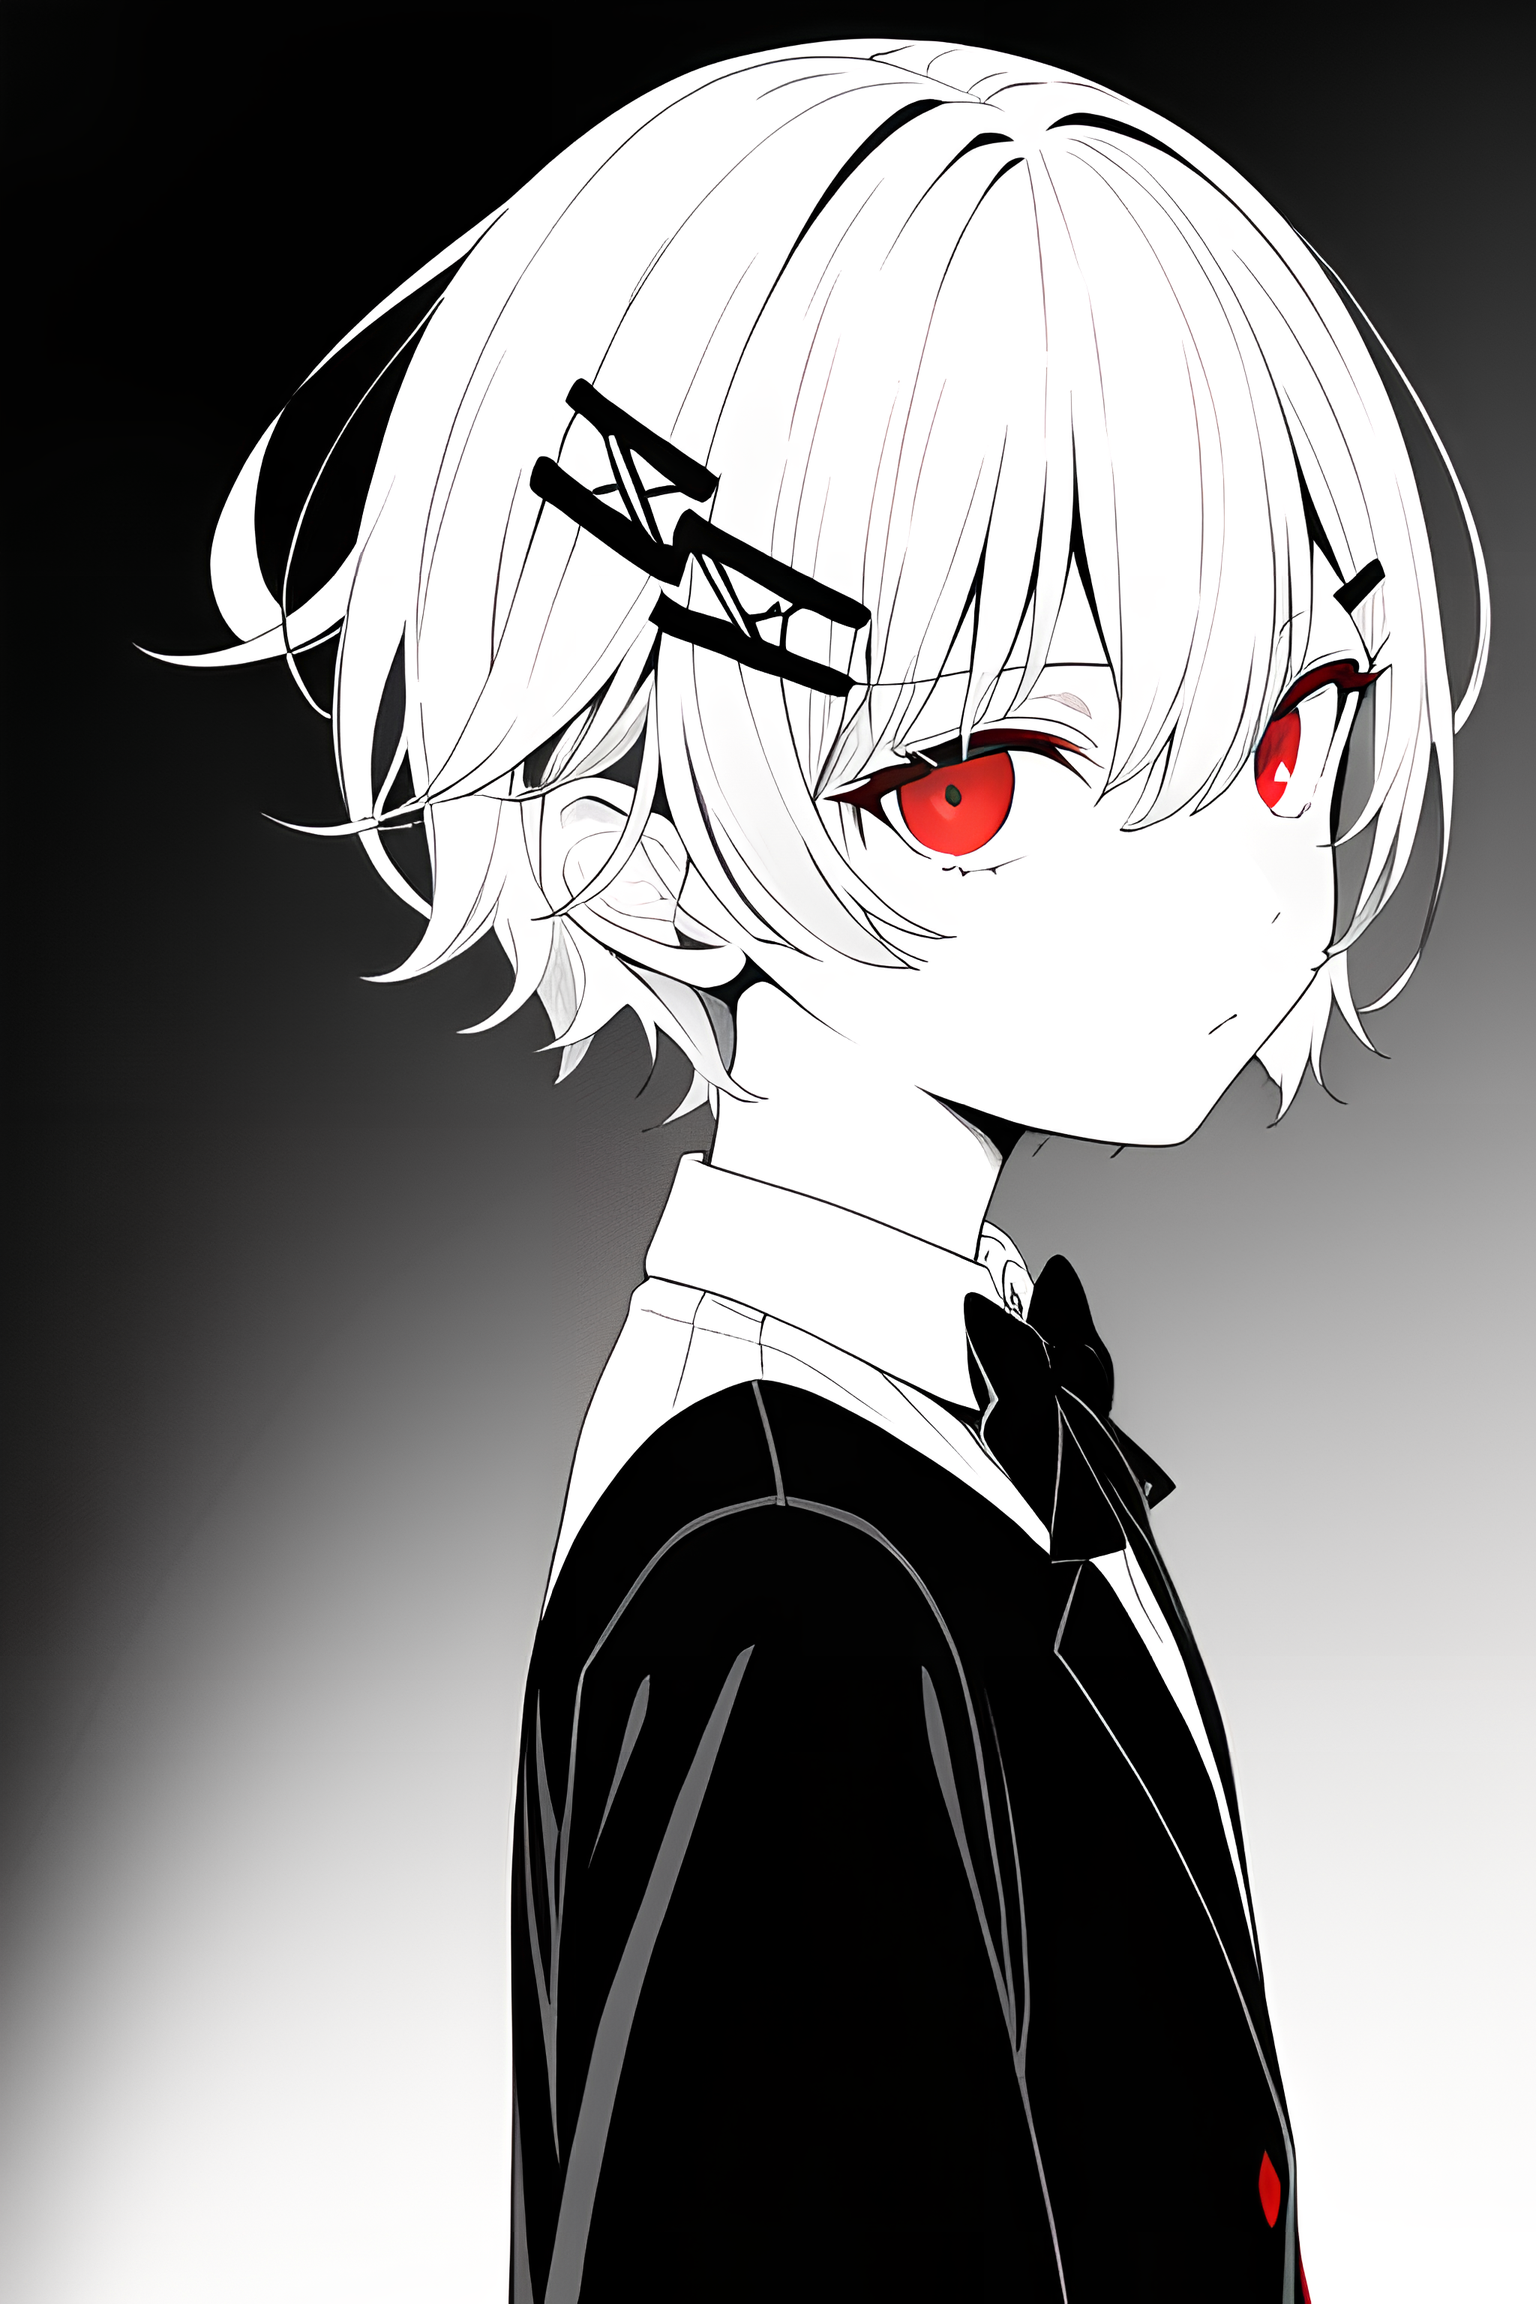 red eyes, face, looking at viewer, anime, dark background, dark, black  background, glowing eyes